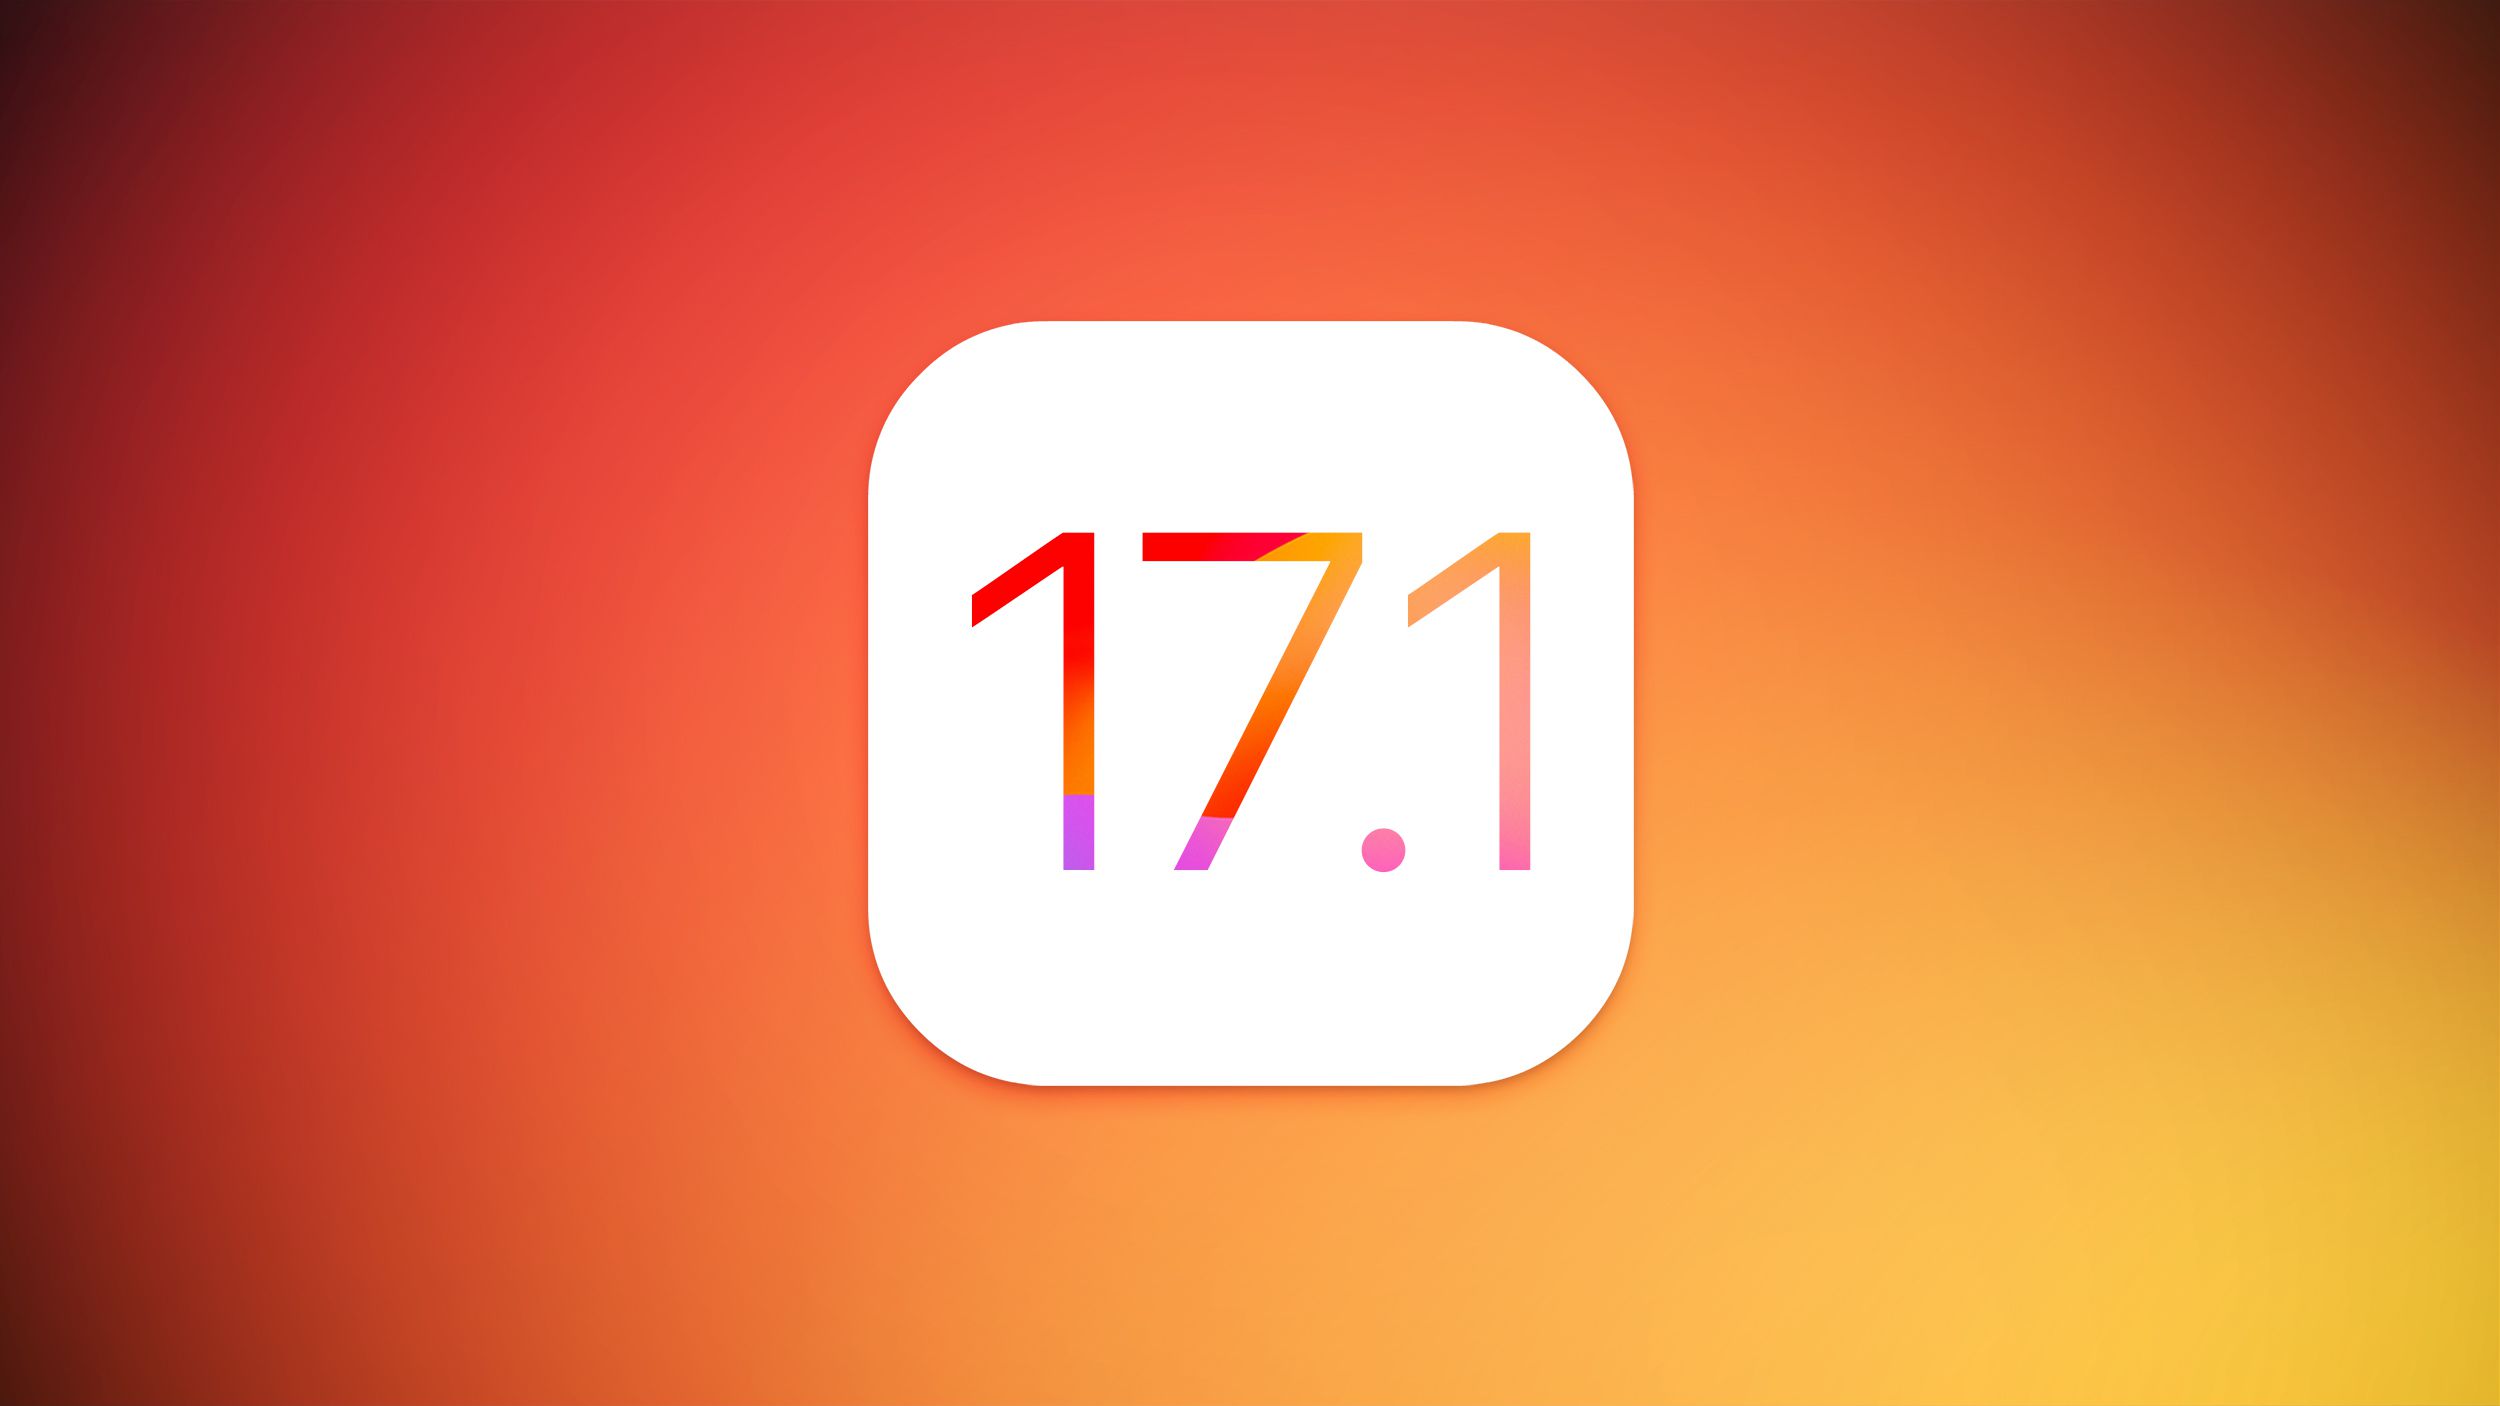 [情報] iOS 17.1 Beta